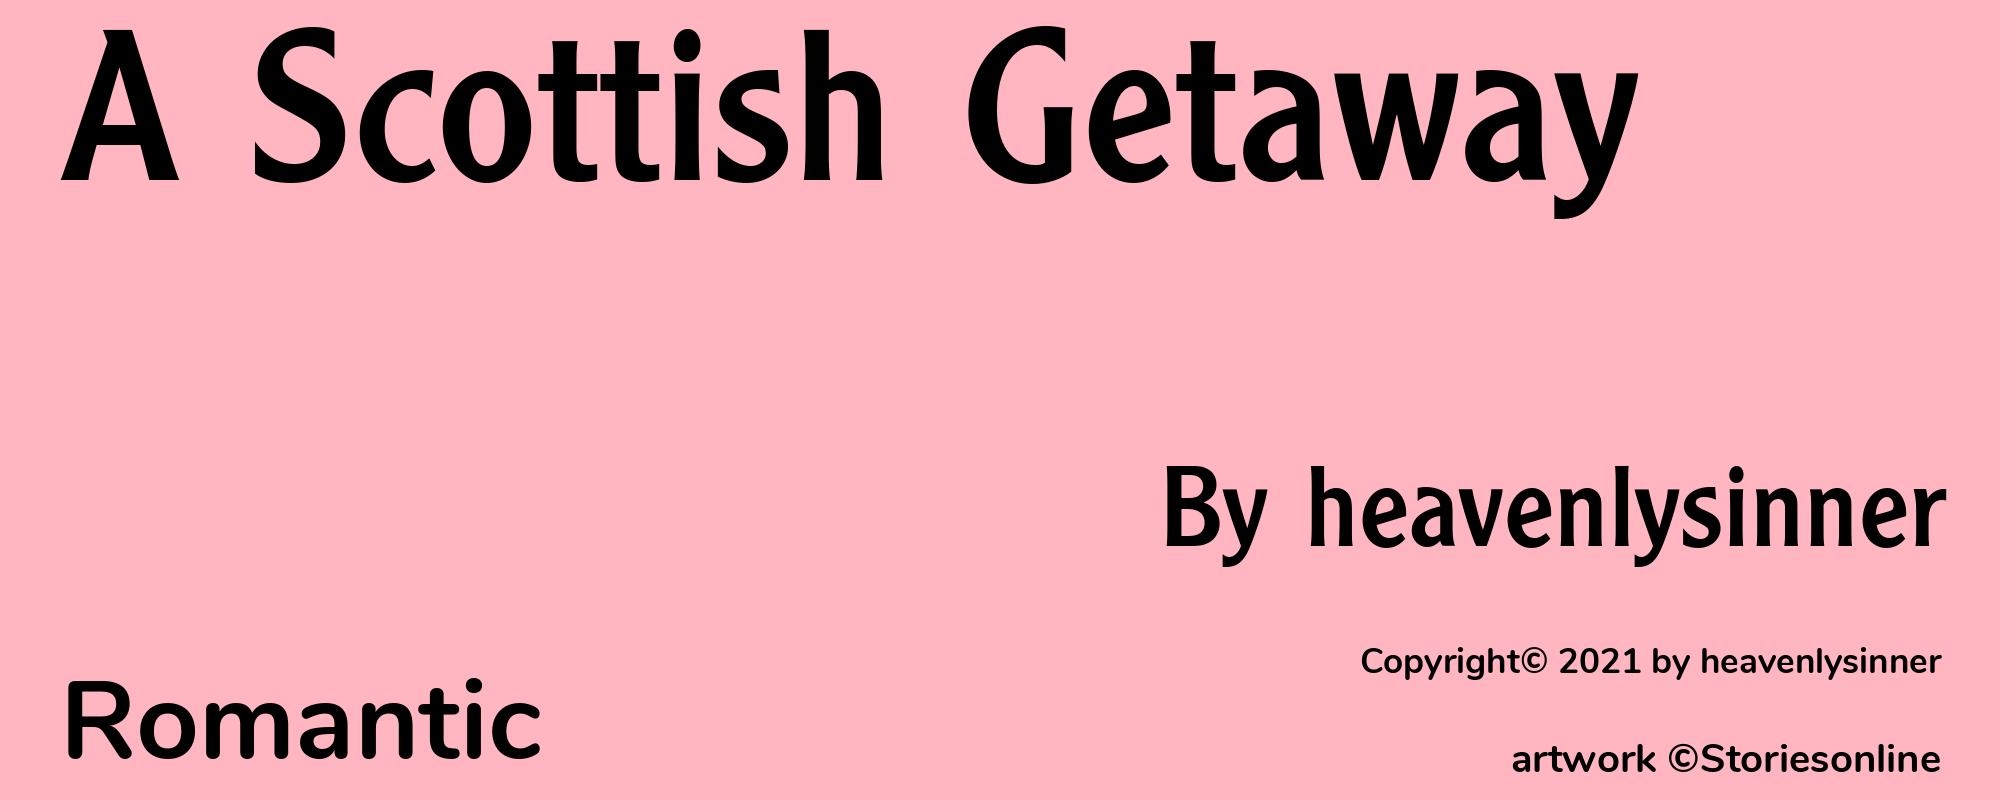 A Scottish Getaway - Cover